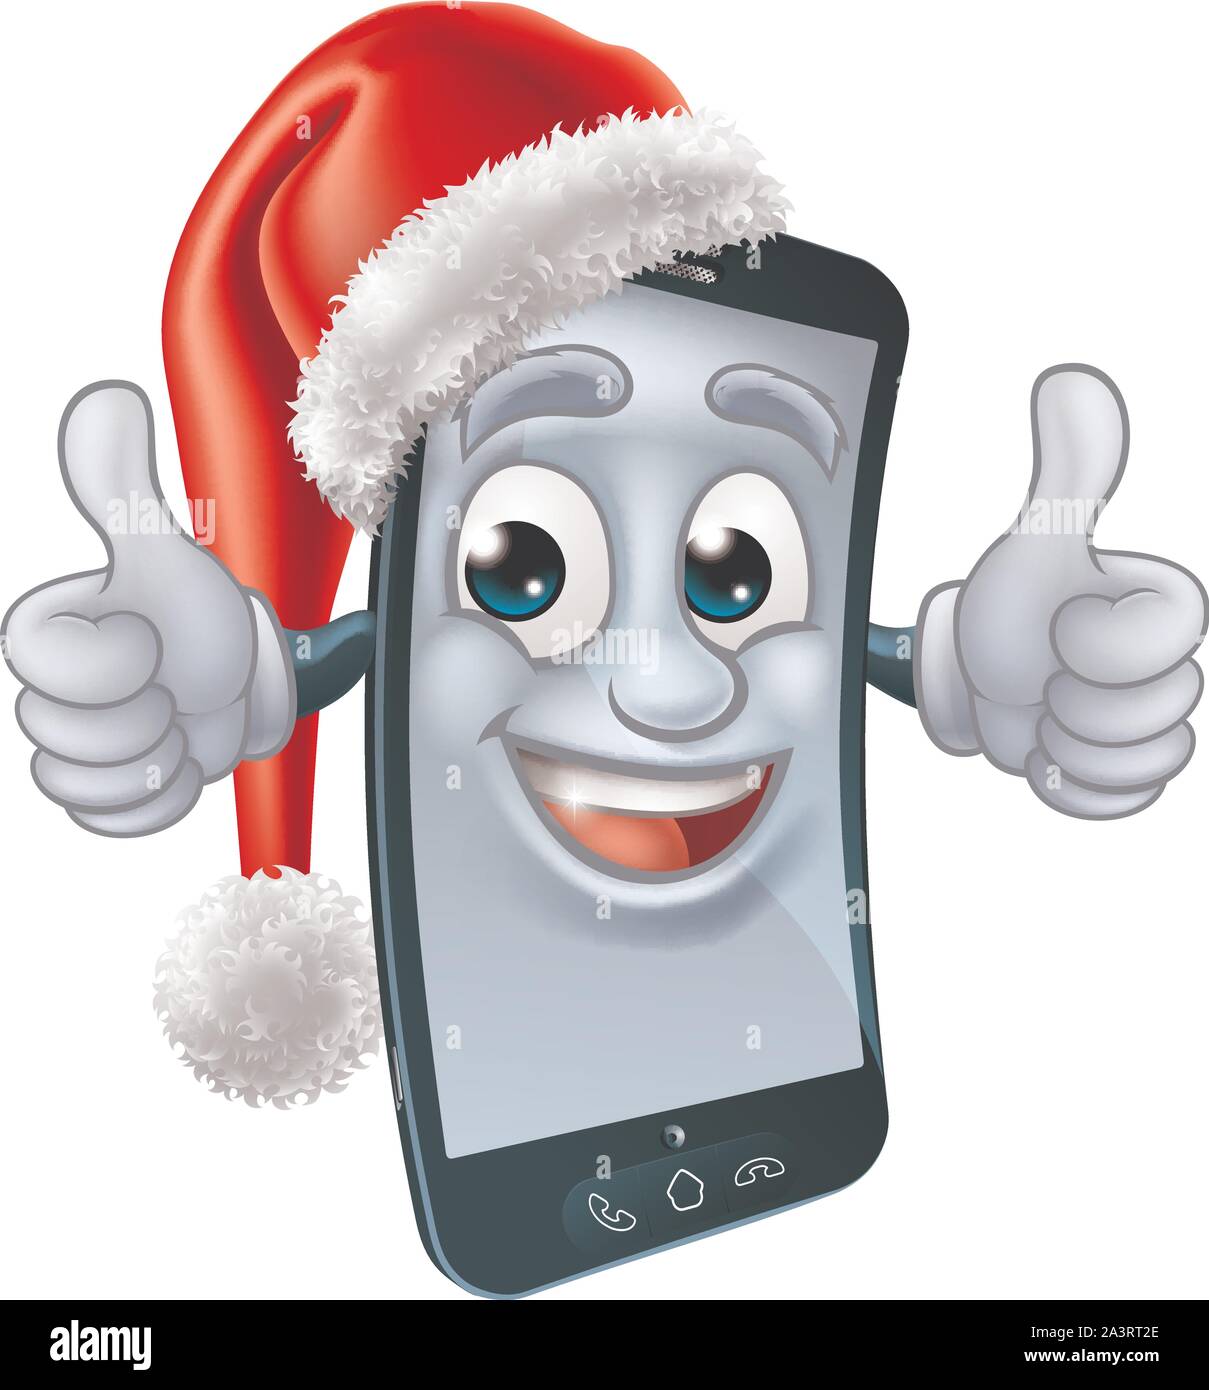 Cell Mobile Phone Christmas Mascot in Santa Hat Stock Vector